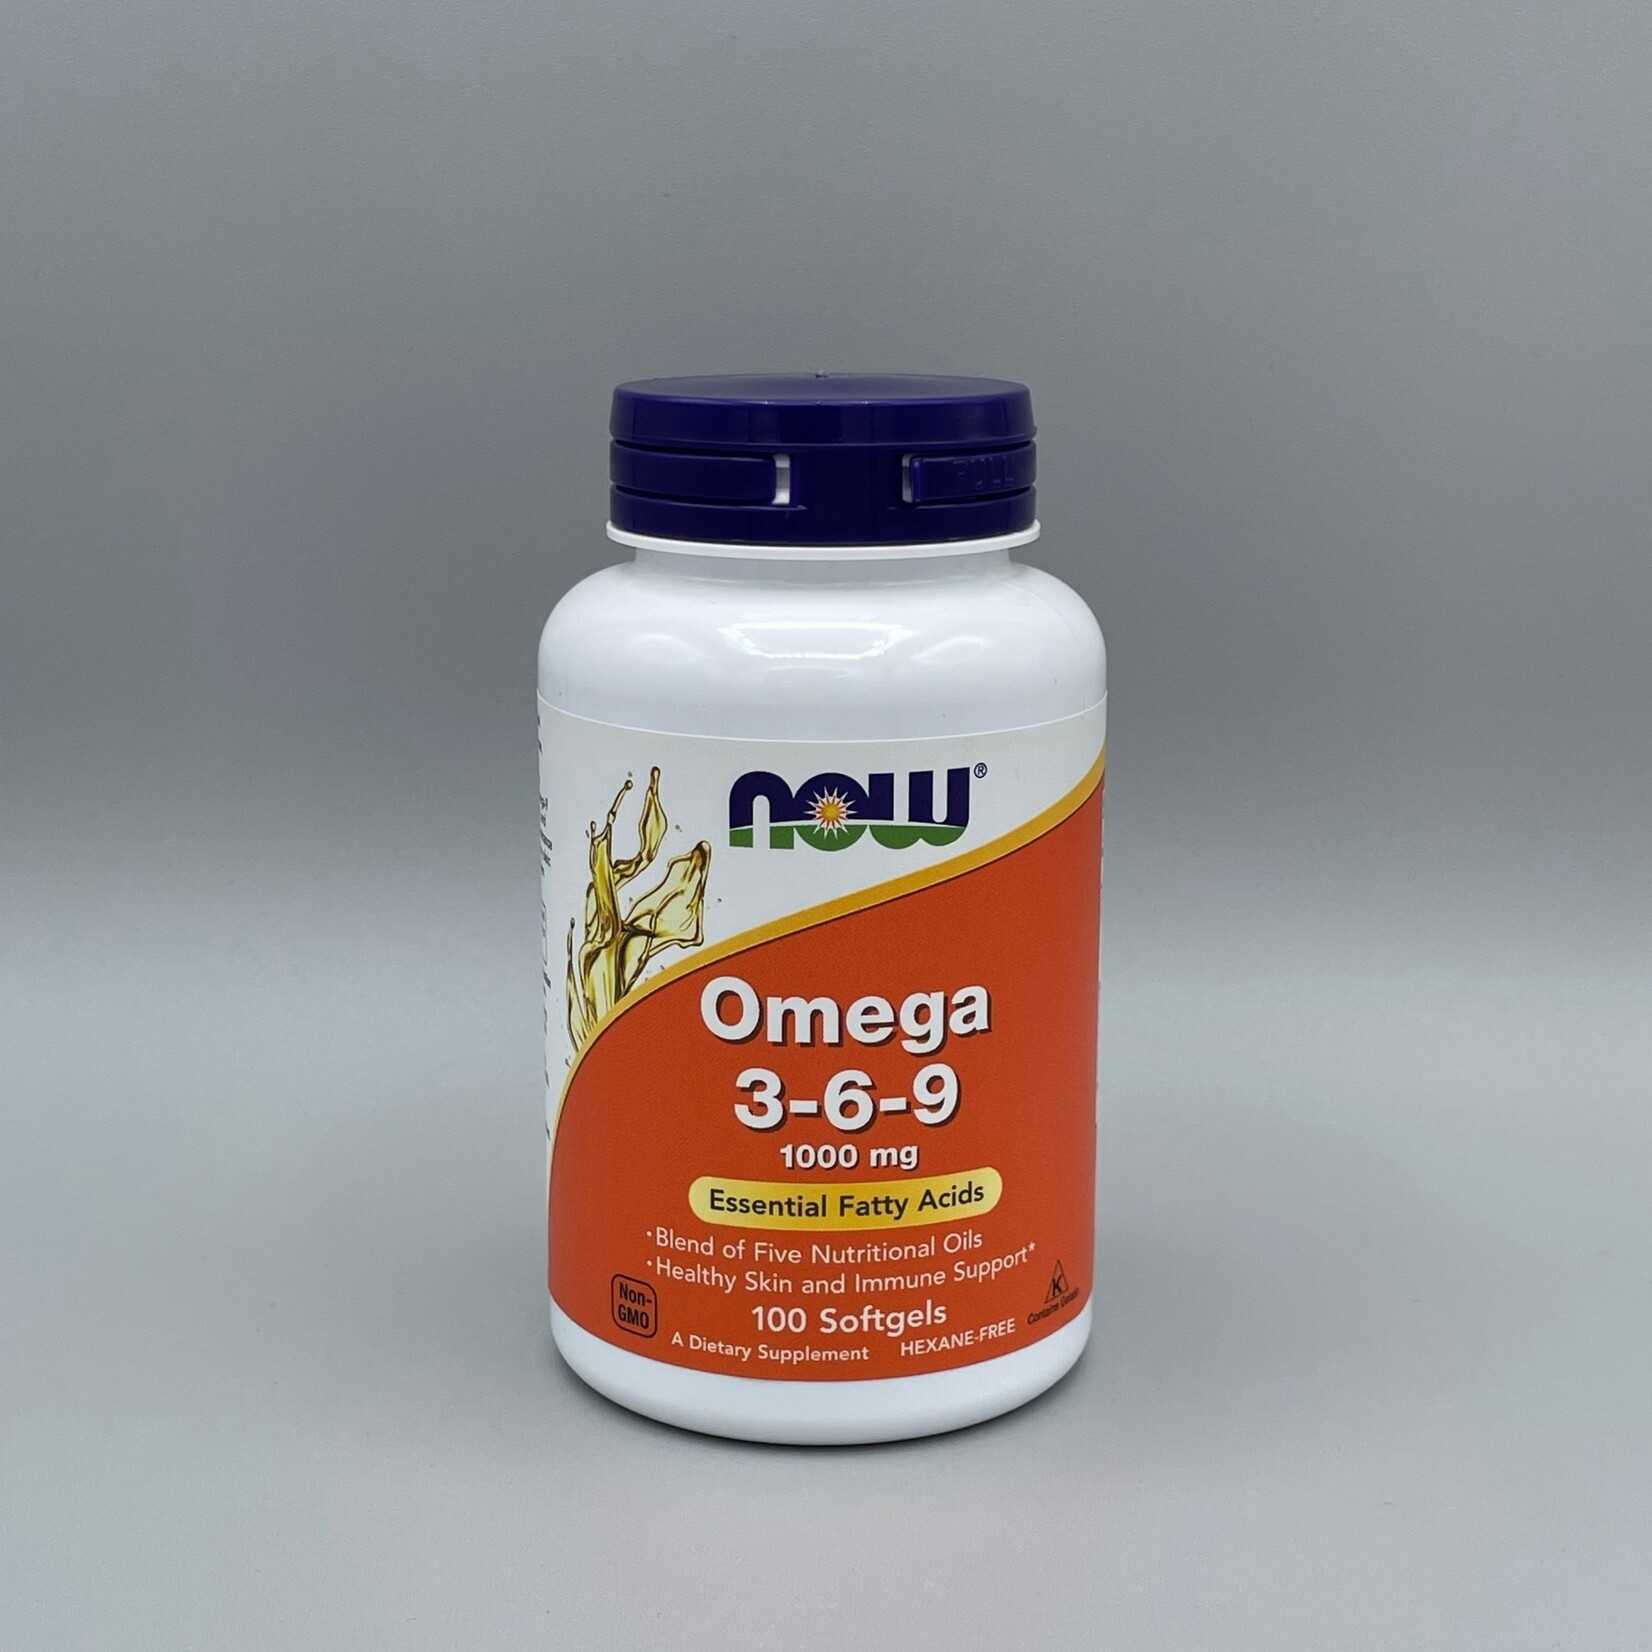 NOW Omega 3-6-9 (Essential Fatty Acids) - 1,000 mg, 100 Softgels